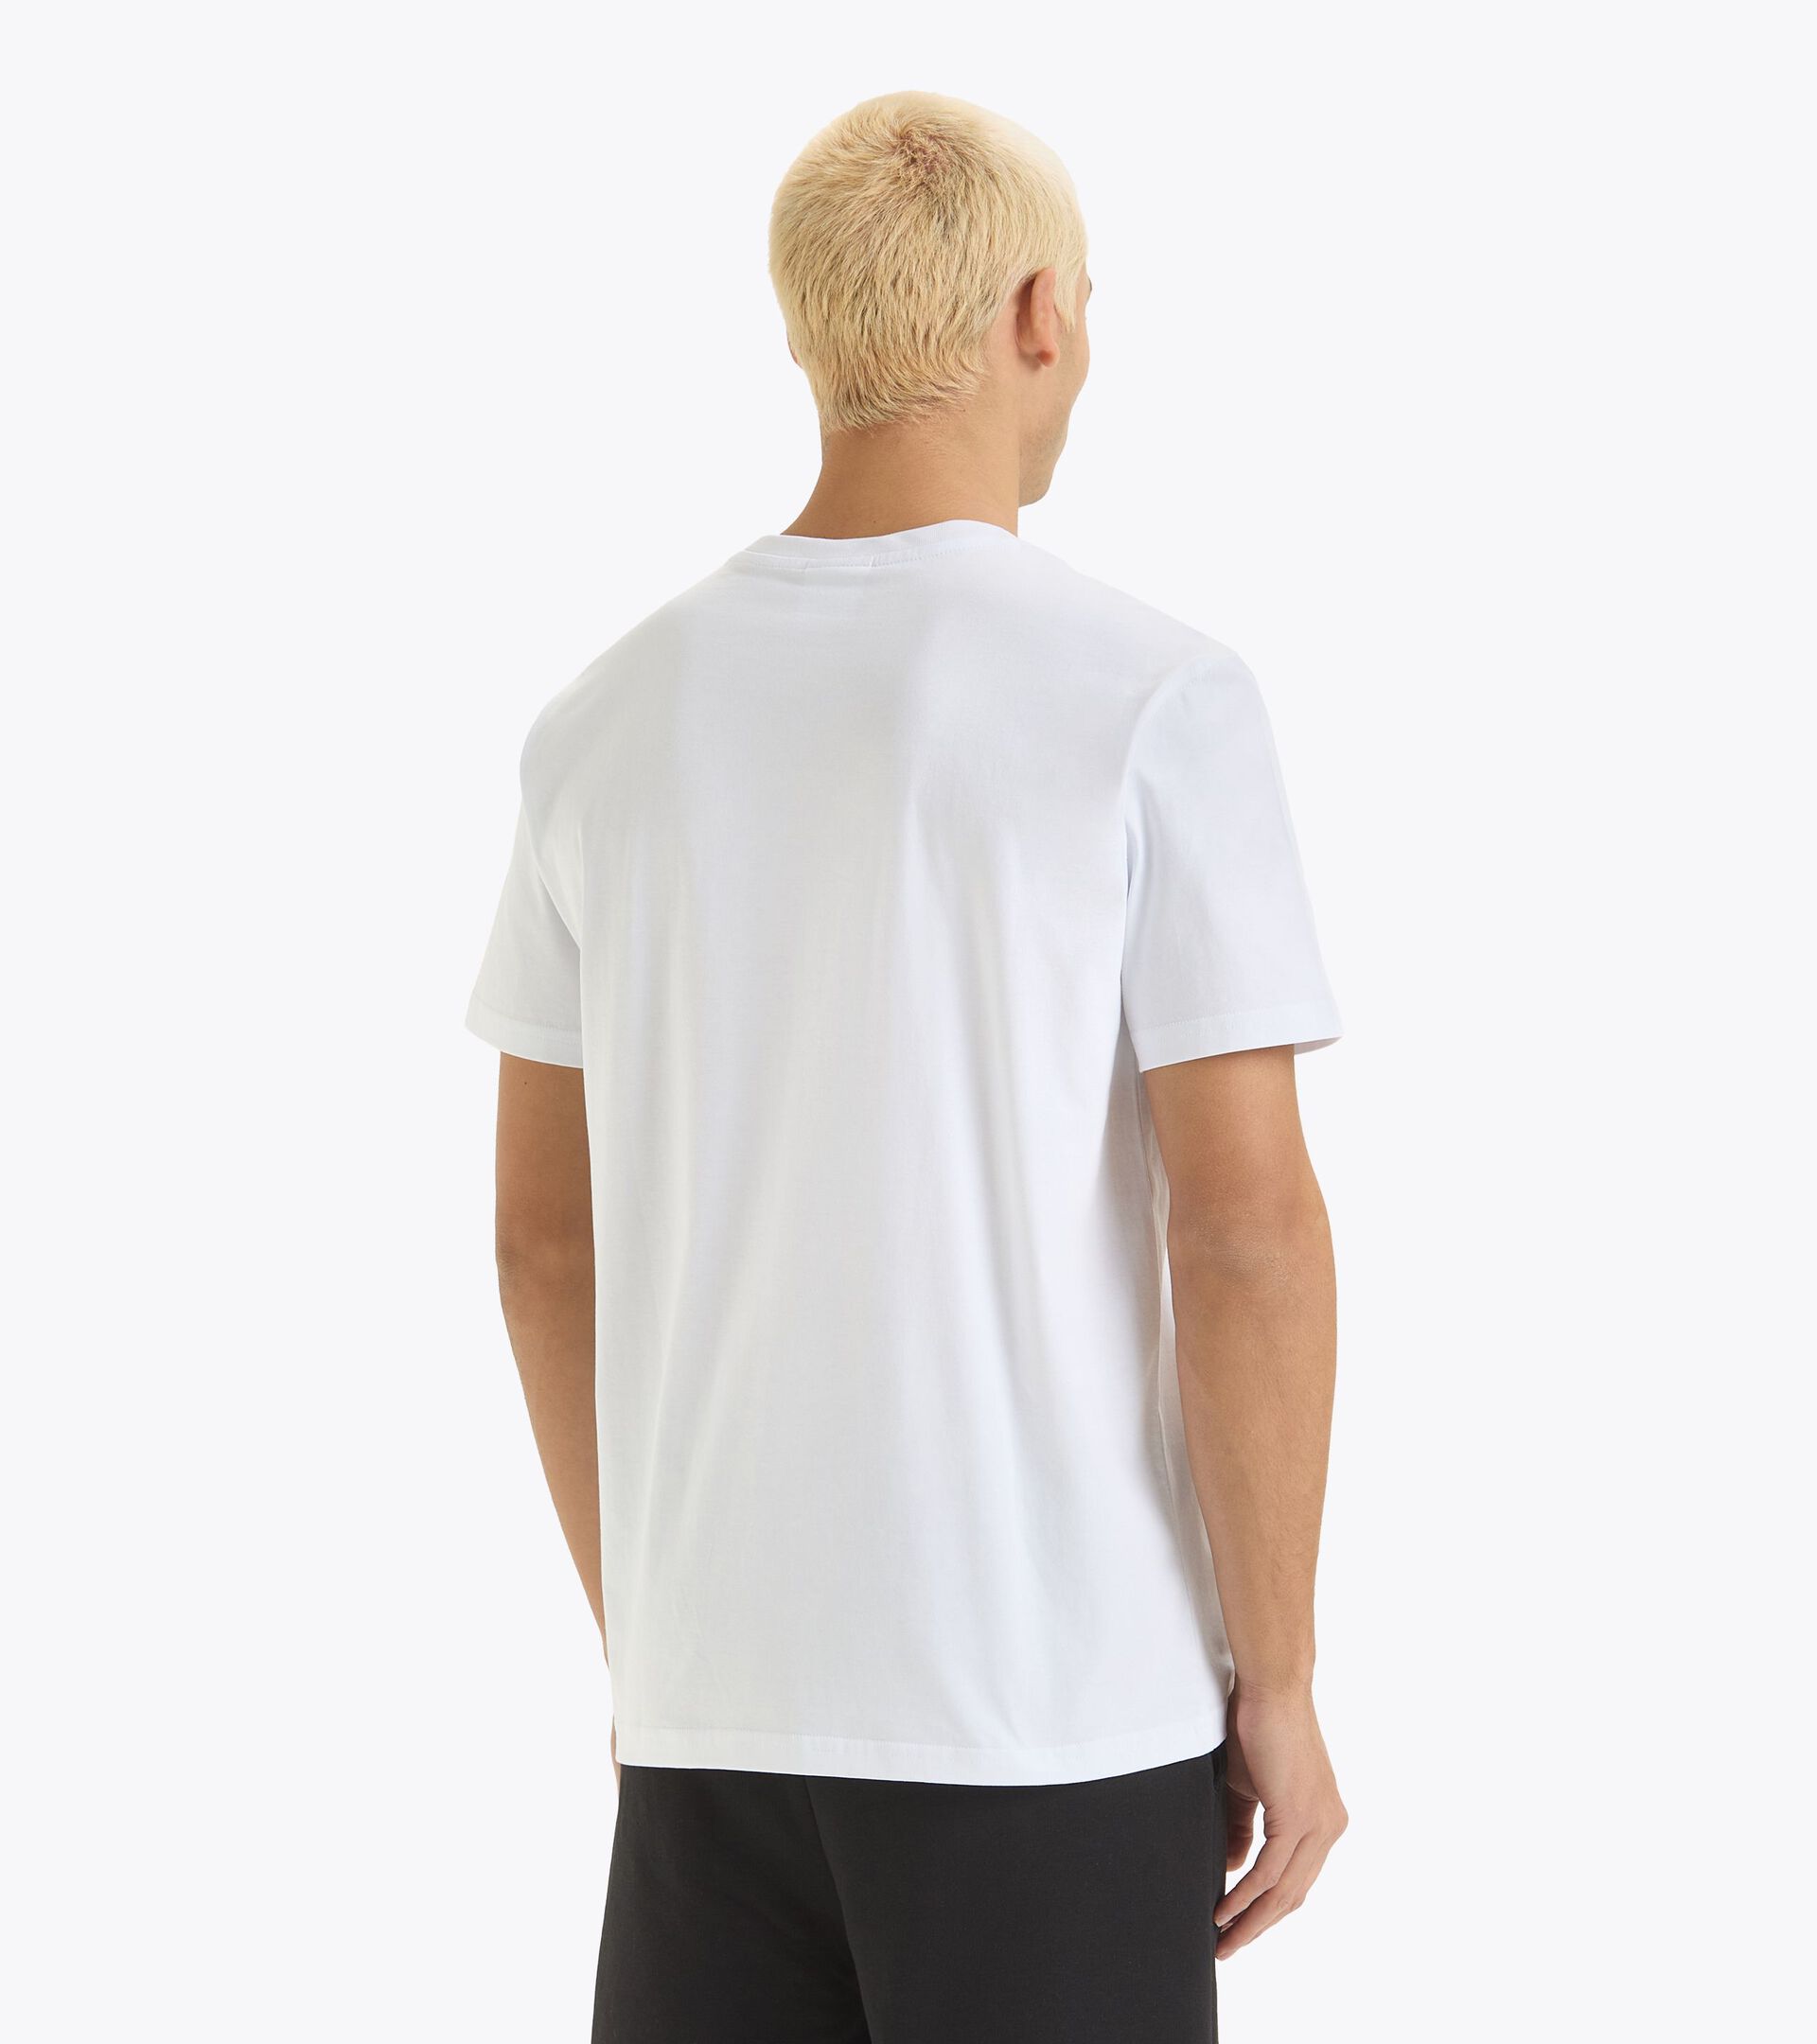 90s-inspired t-shirt - Made in Italy - Men’s T-SHIRT SS TENNIS 90 OPTICAL WHITE - Diadora